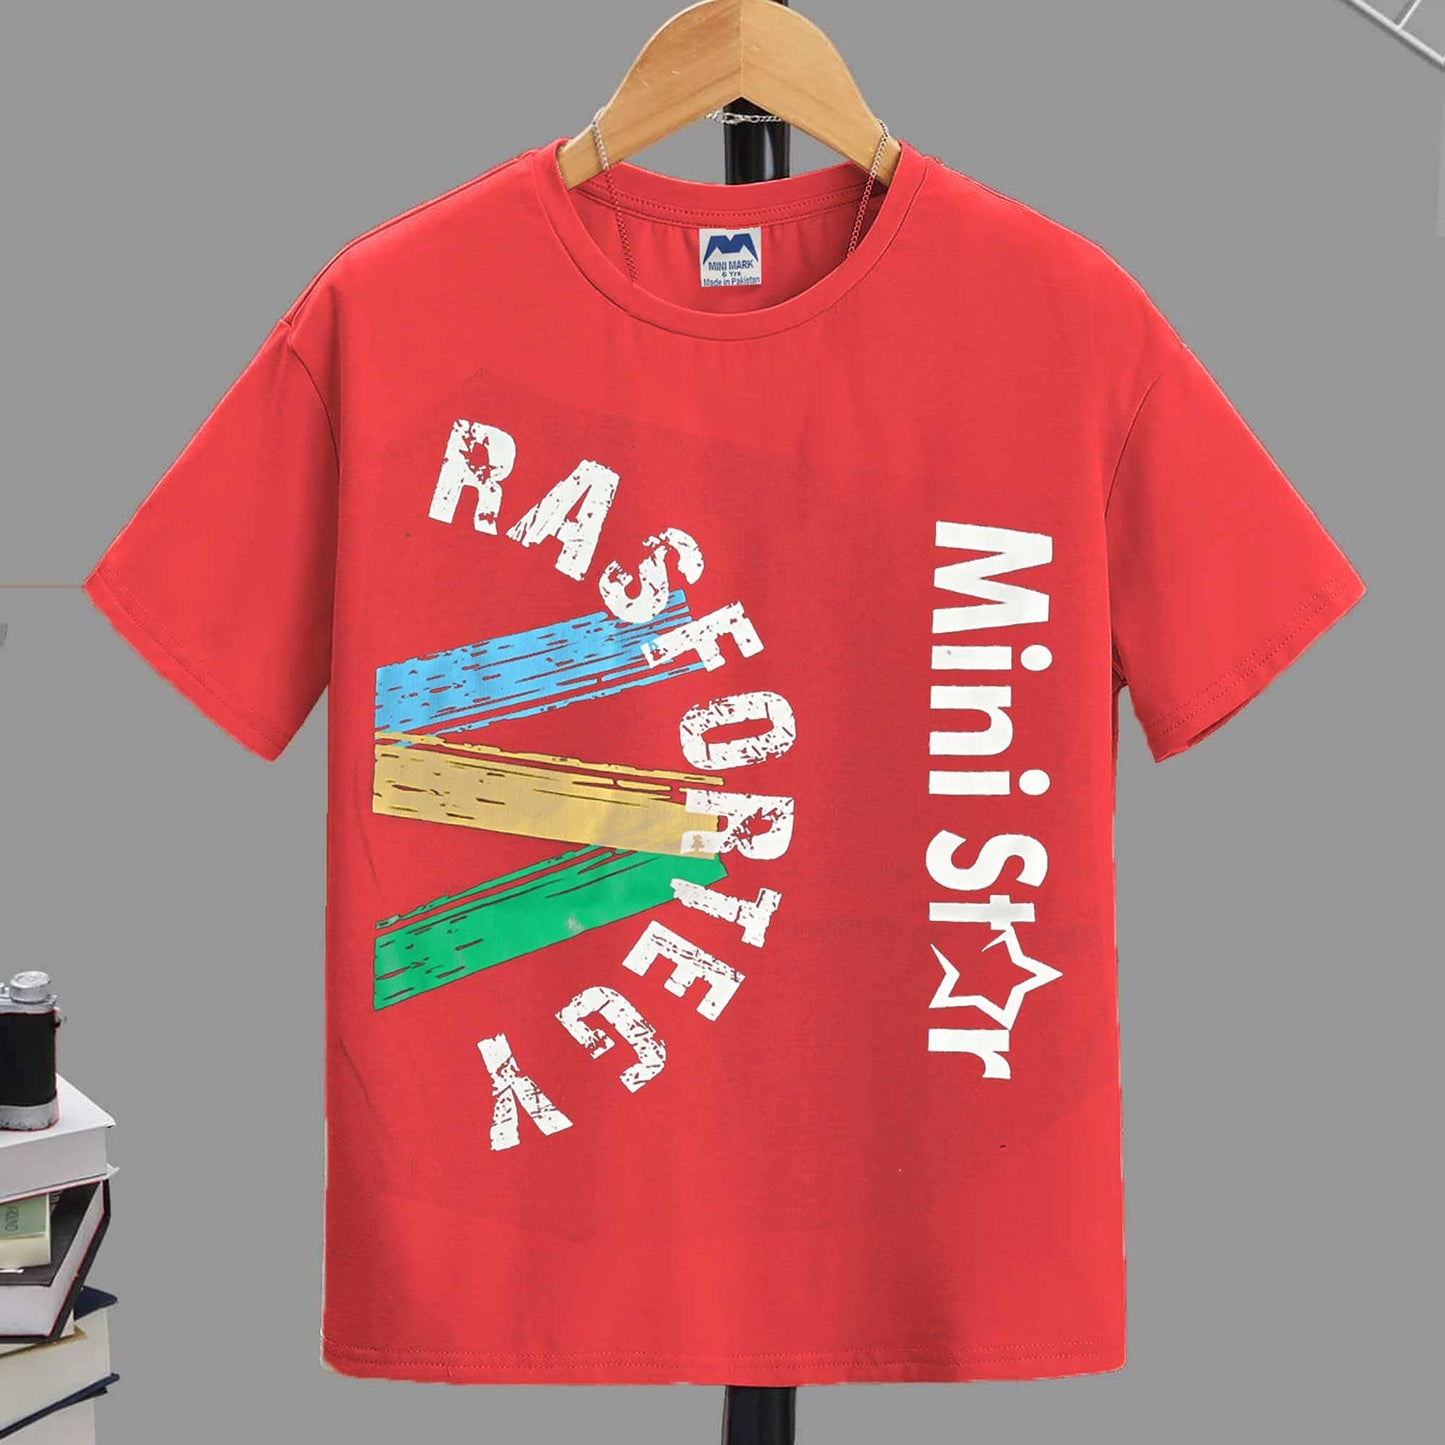 Mini Mark Kid's Rasfortegy Printed Short Sleeve Tee Shirt Boy's Tee Shirt KMG Red 6-12 Months 